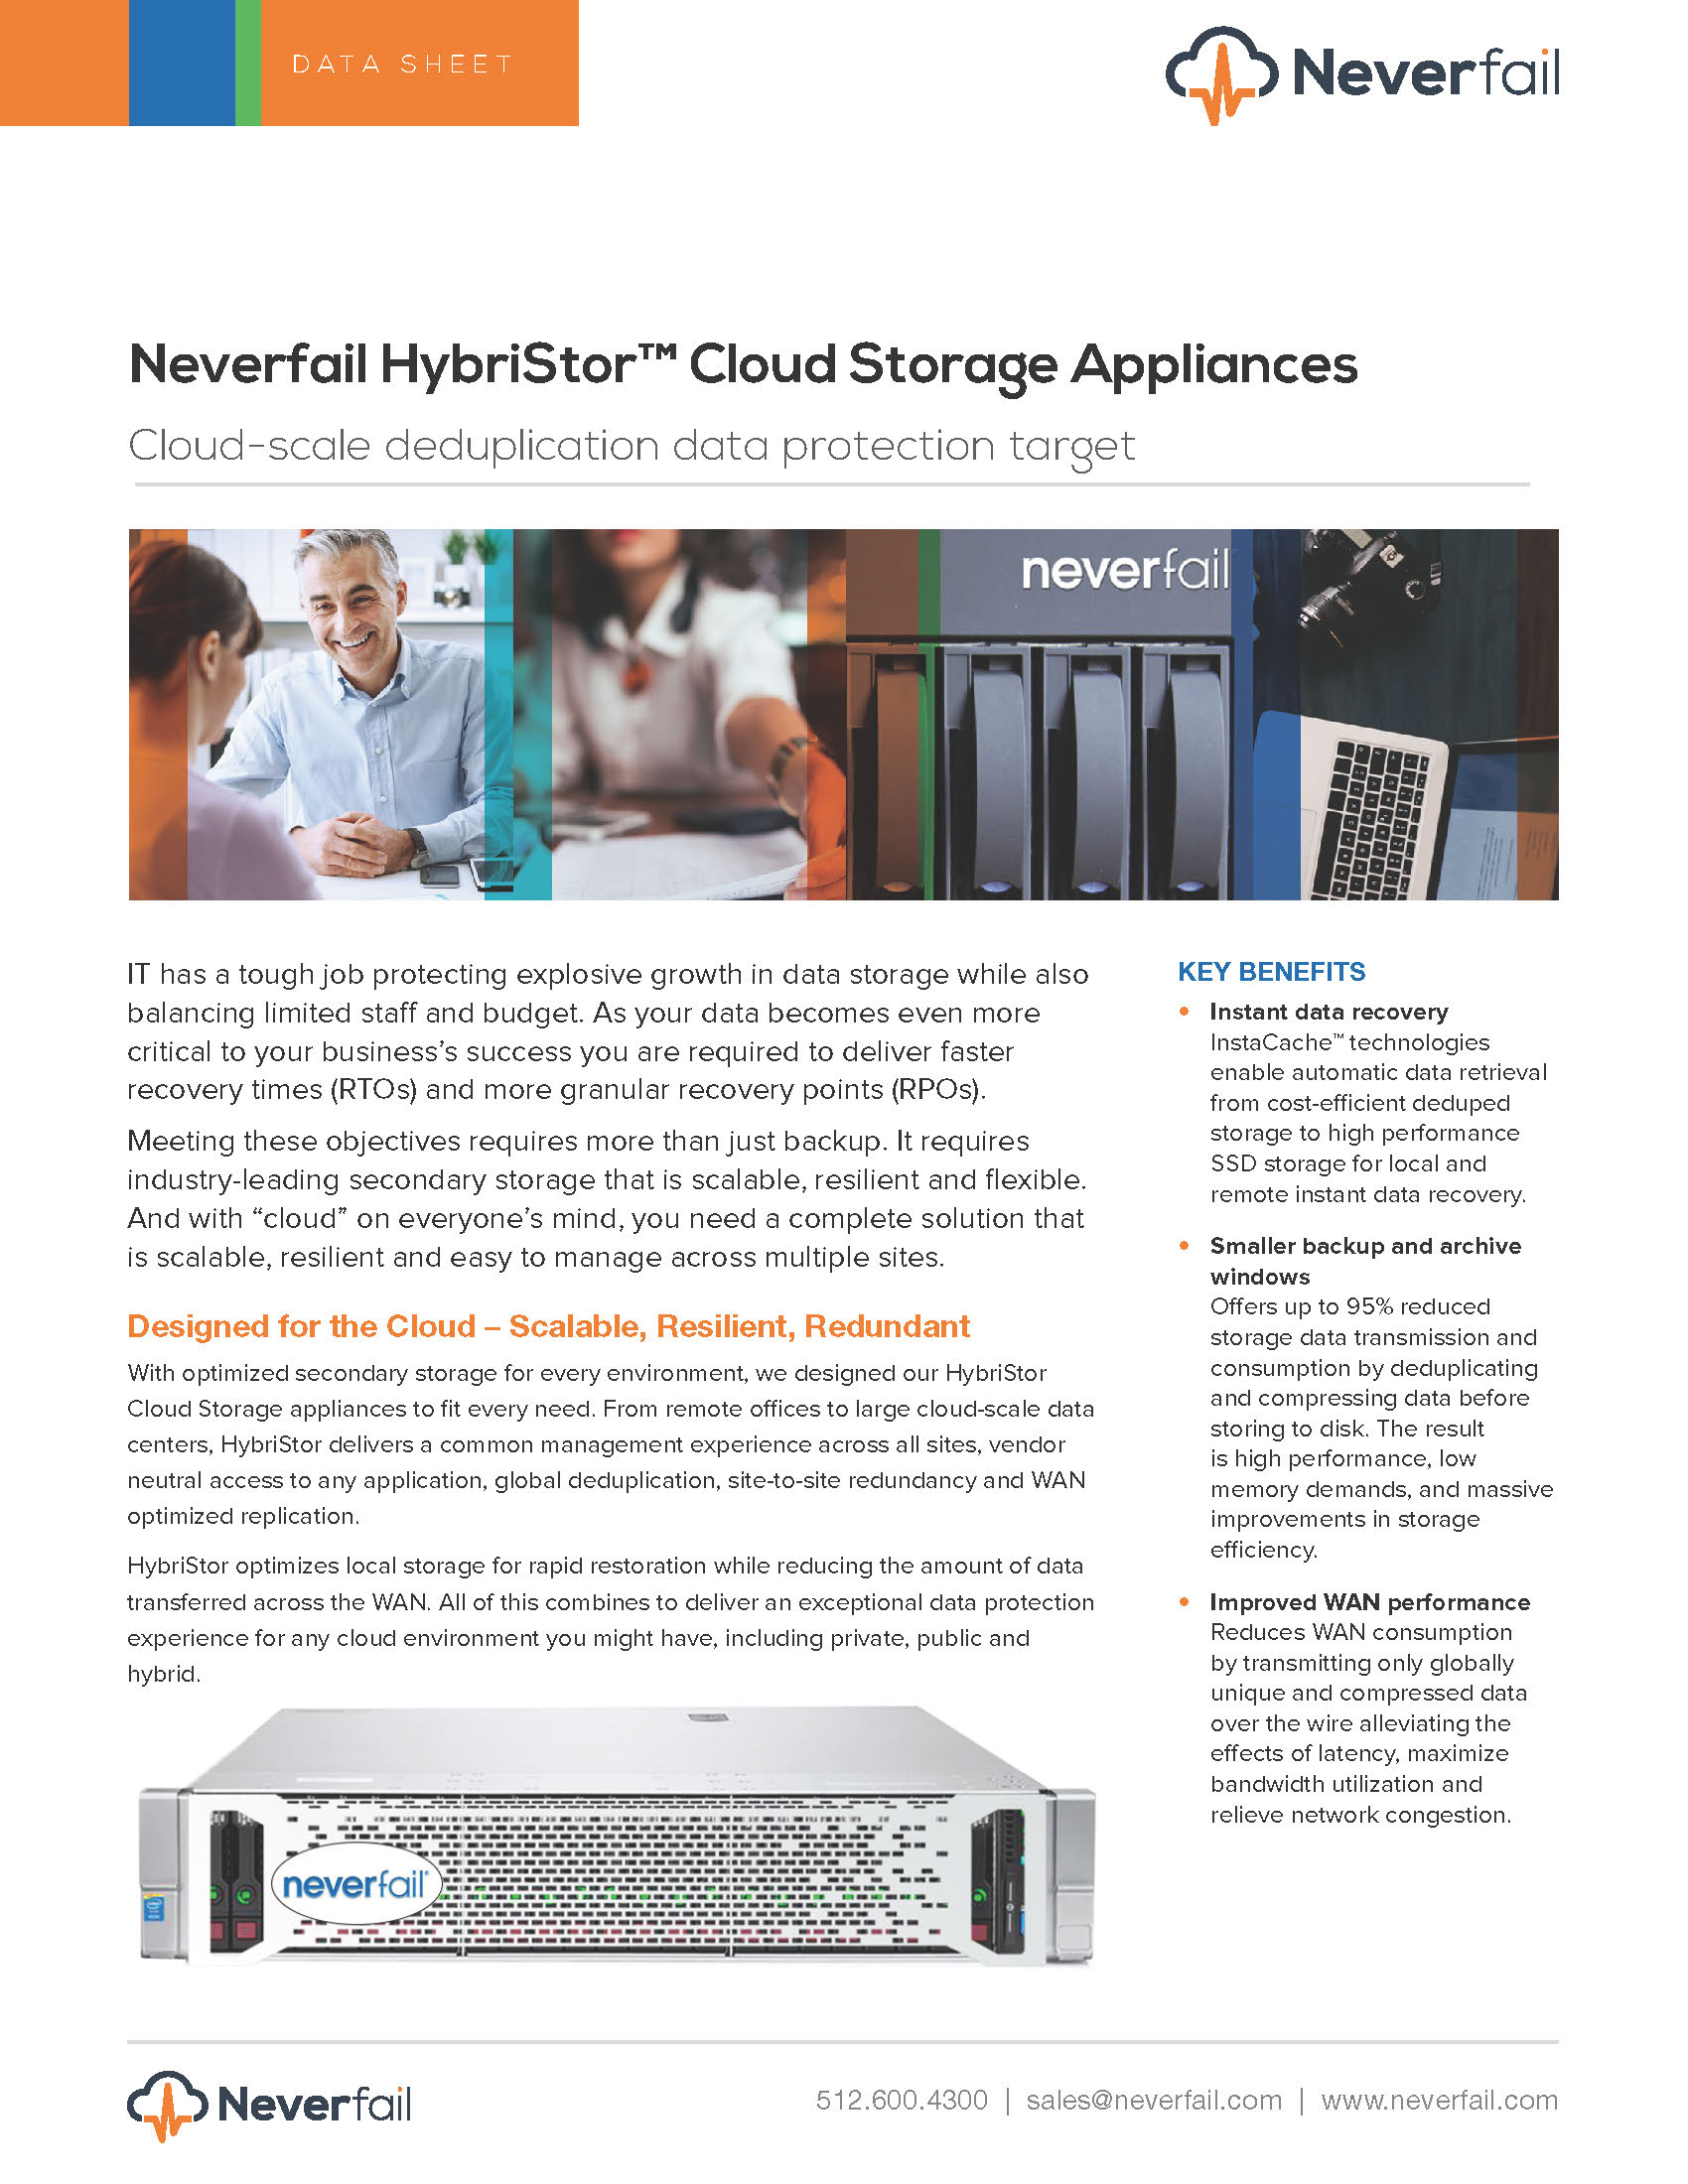 HybriStor datasheet object storage gateway and global deduplication appliance